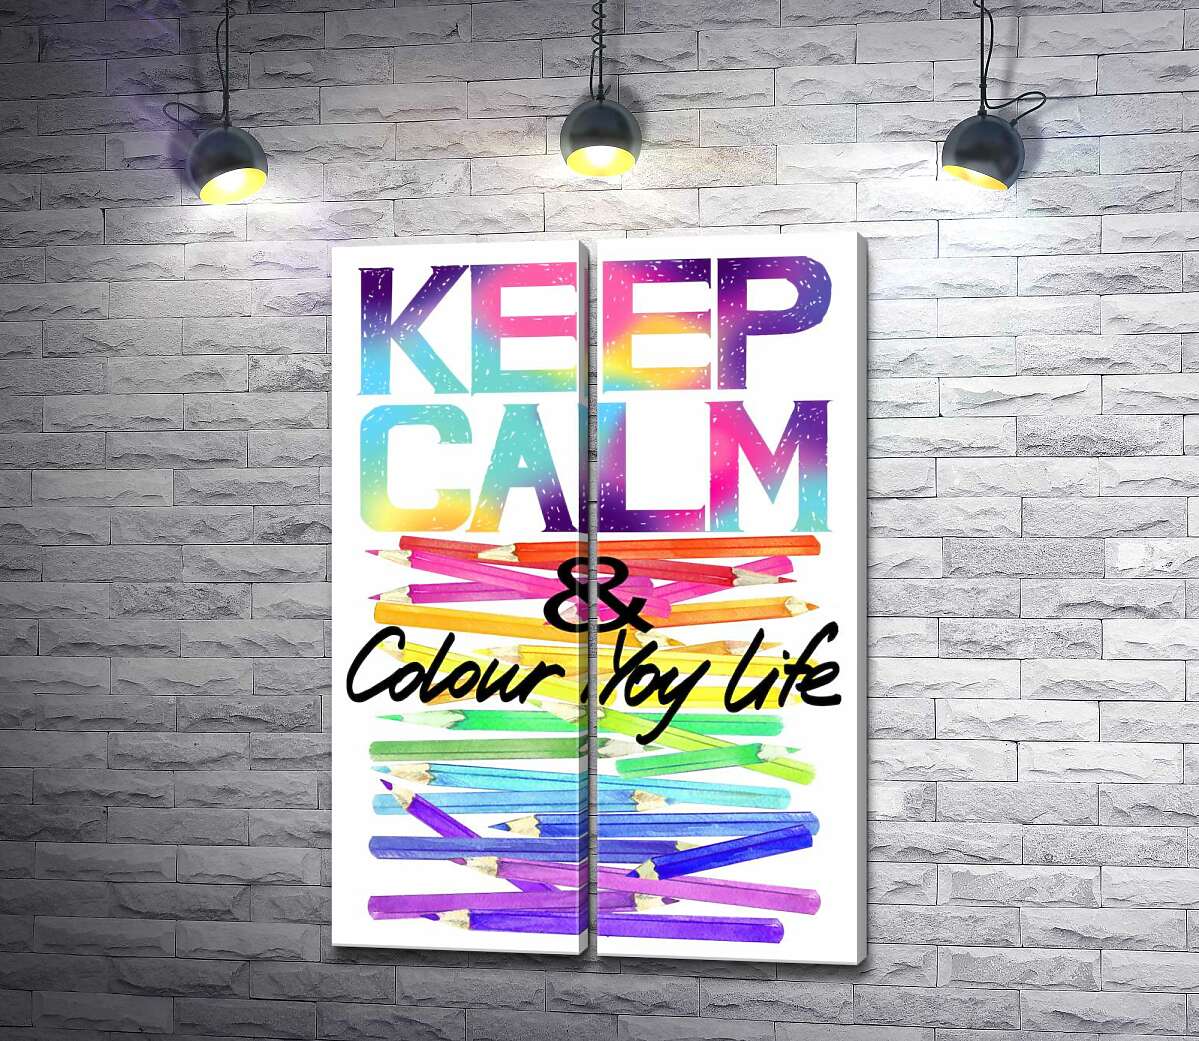 модульная картина Радужные карандаши с надписью "keep calm and colour your life"